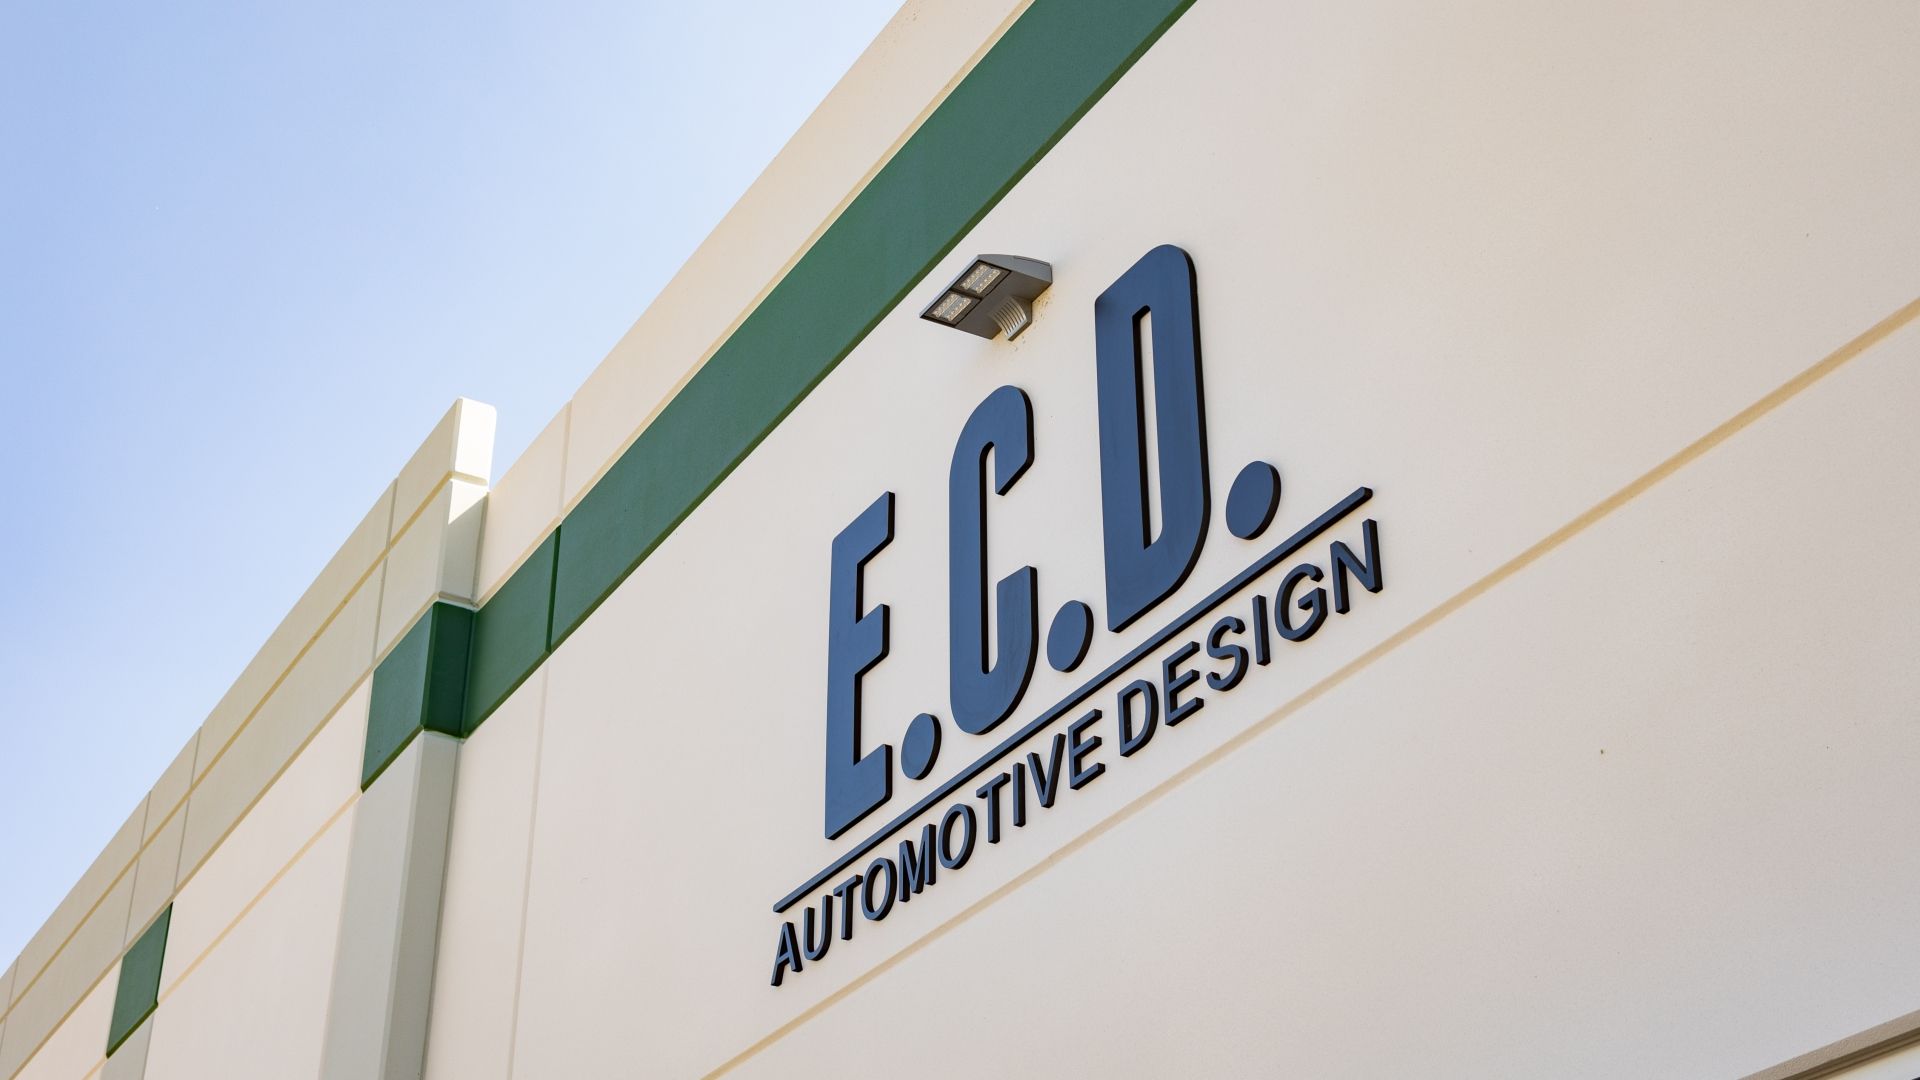 E.C.D. Automotive Design Facility